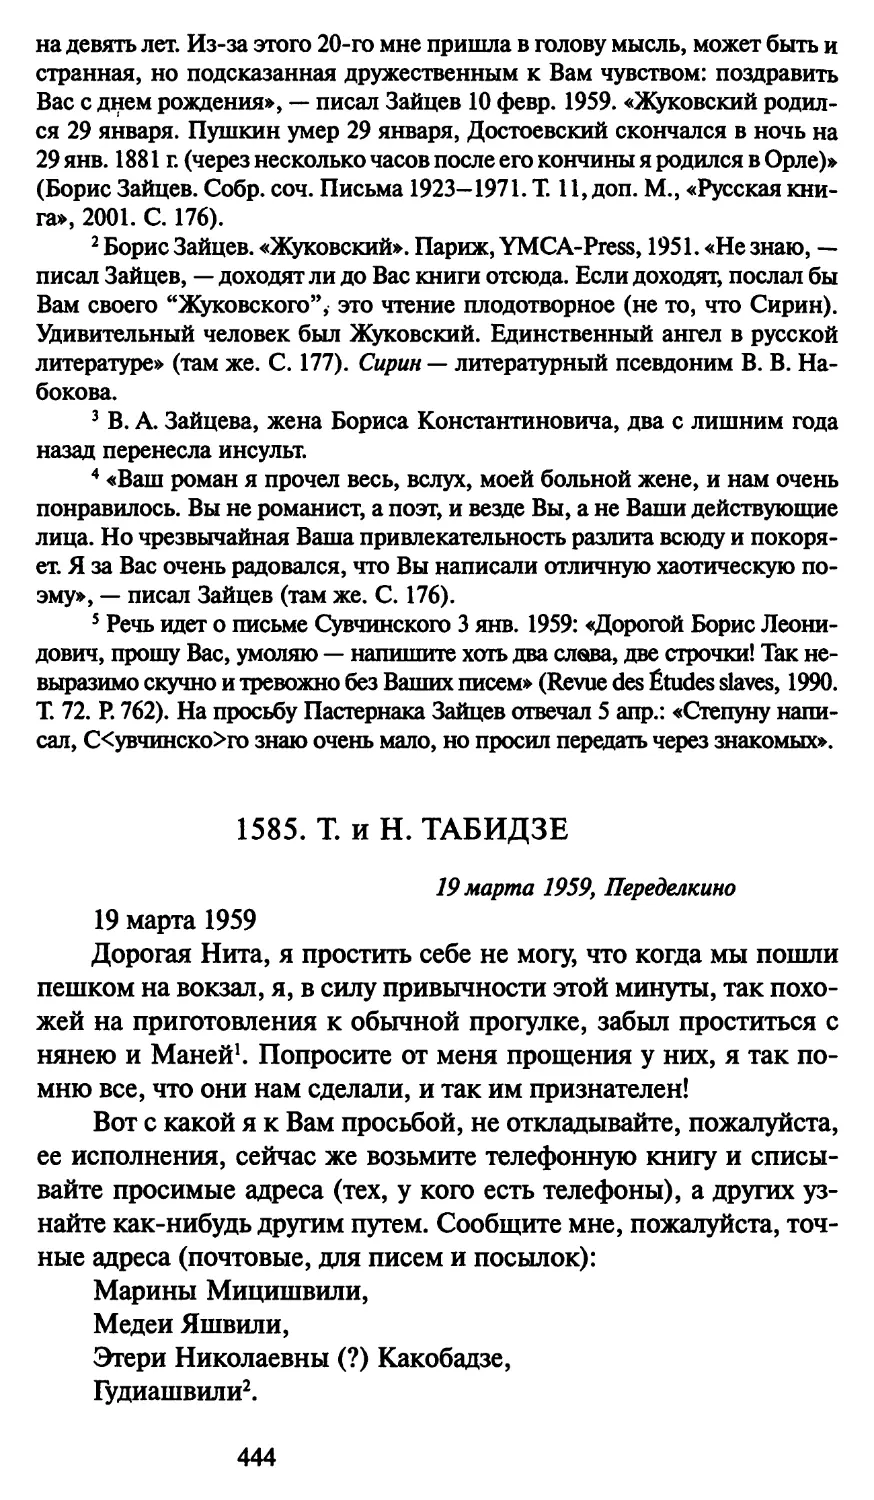 1585. Т. и Н. Табидзе 19 марта 1959